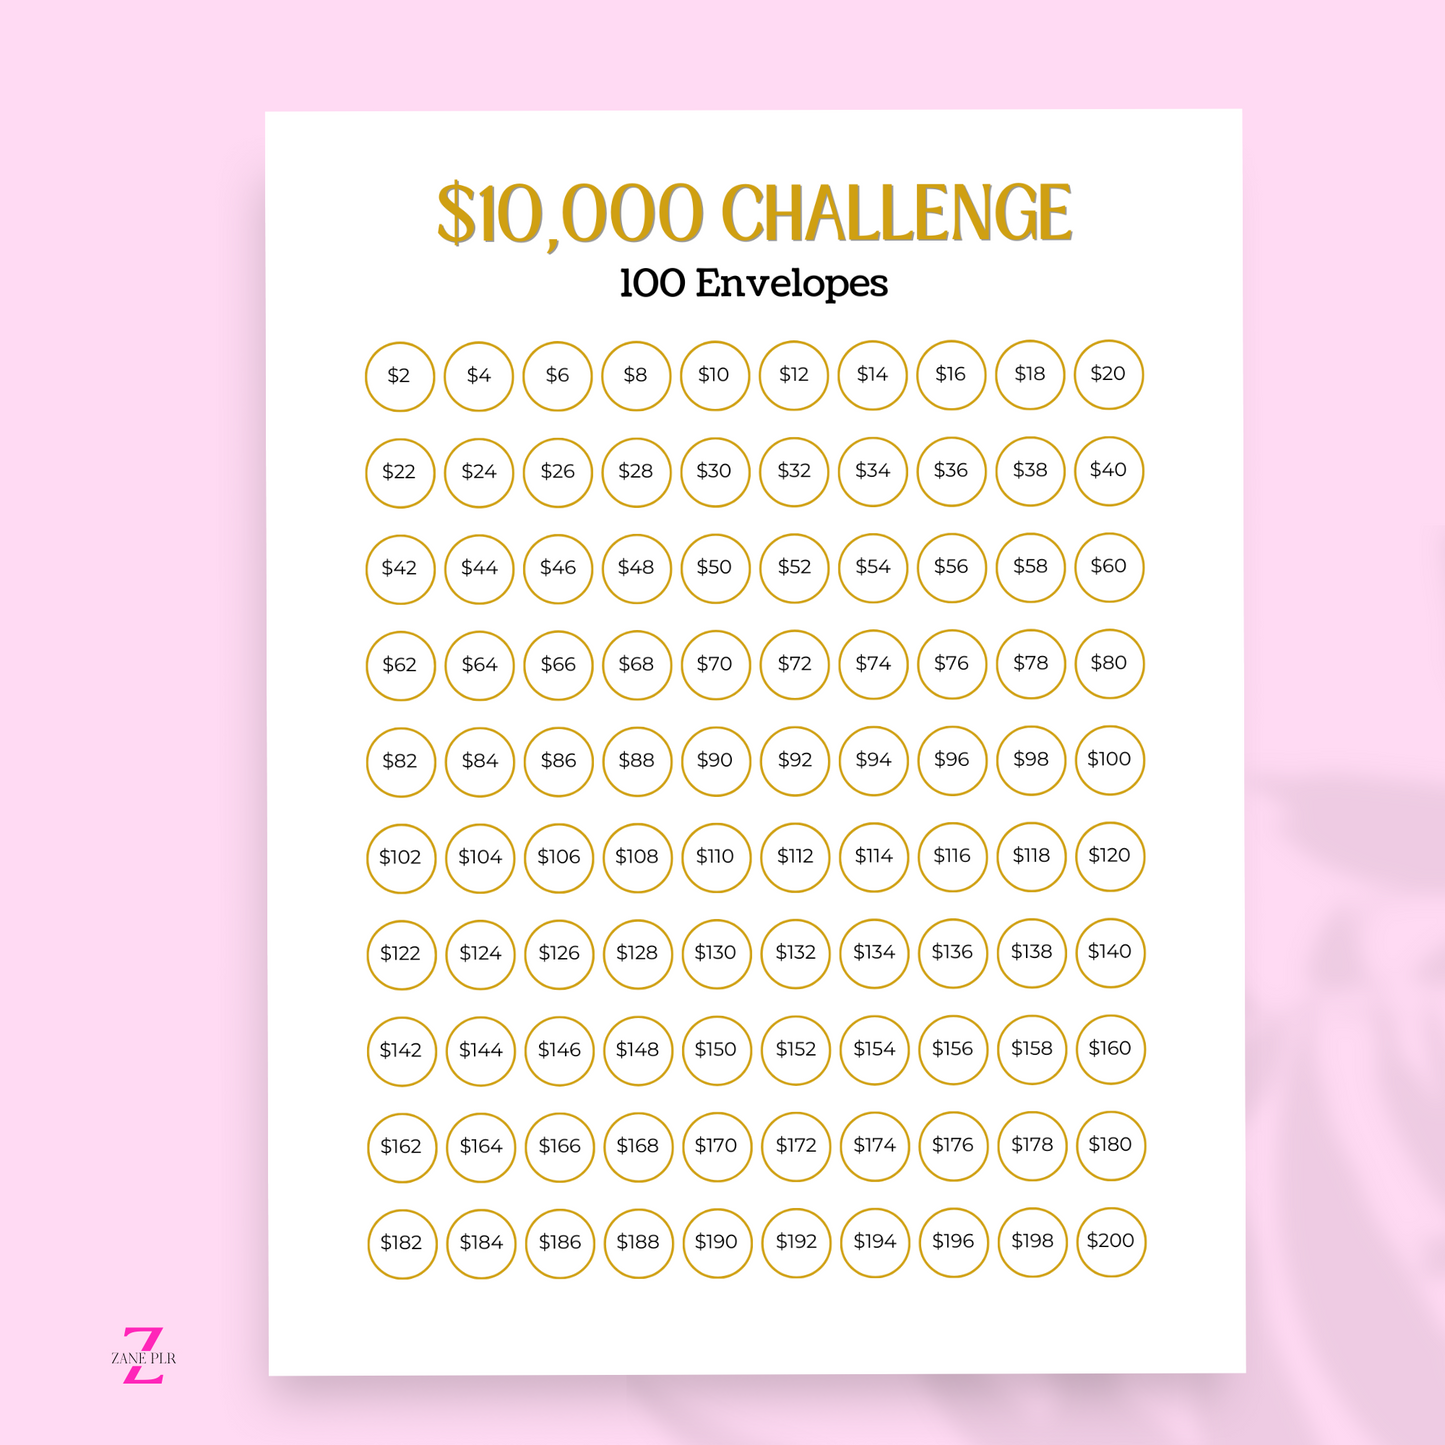 PLR 10K Savings Challenge